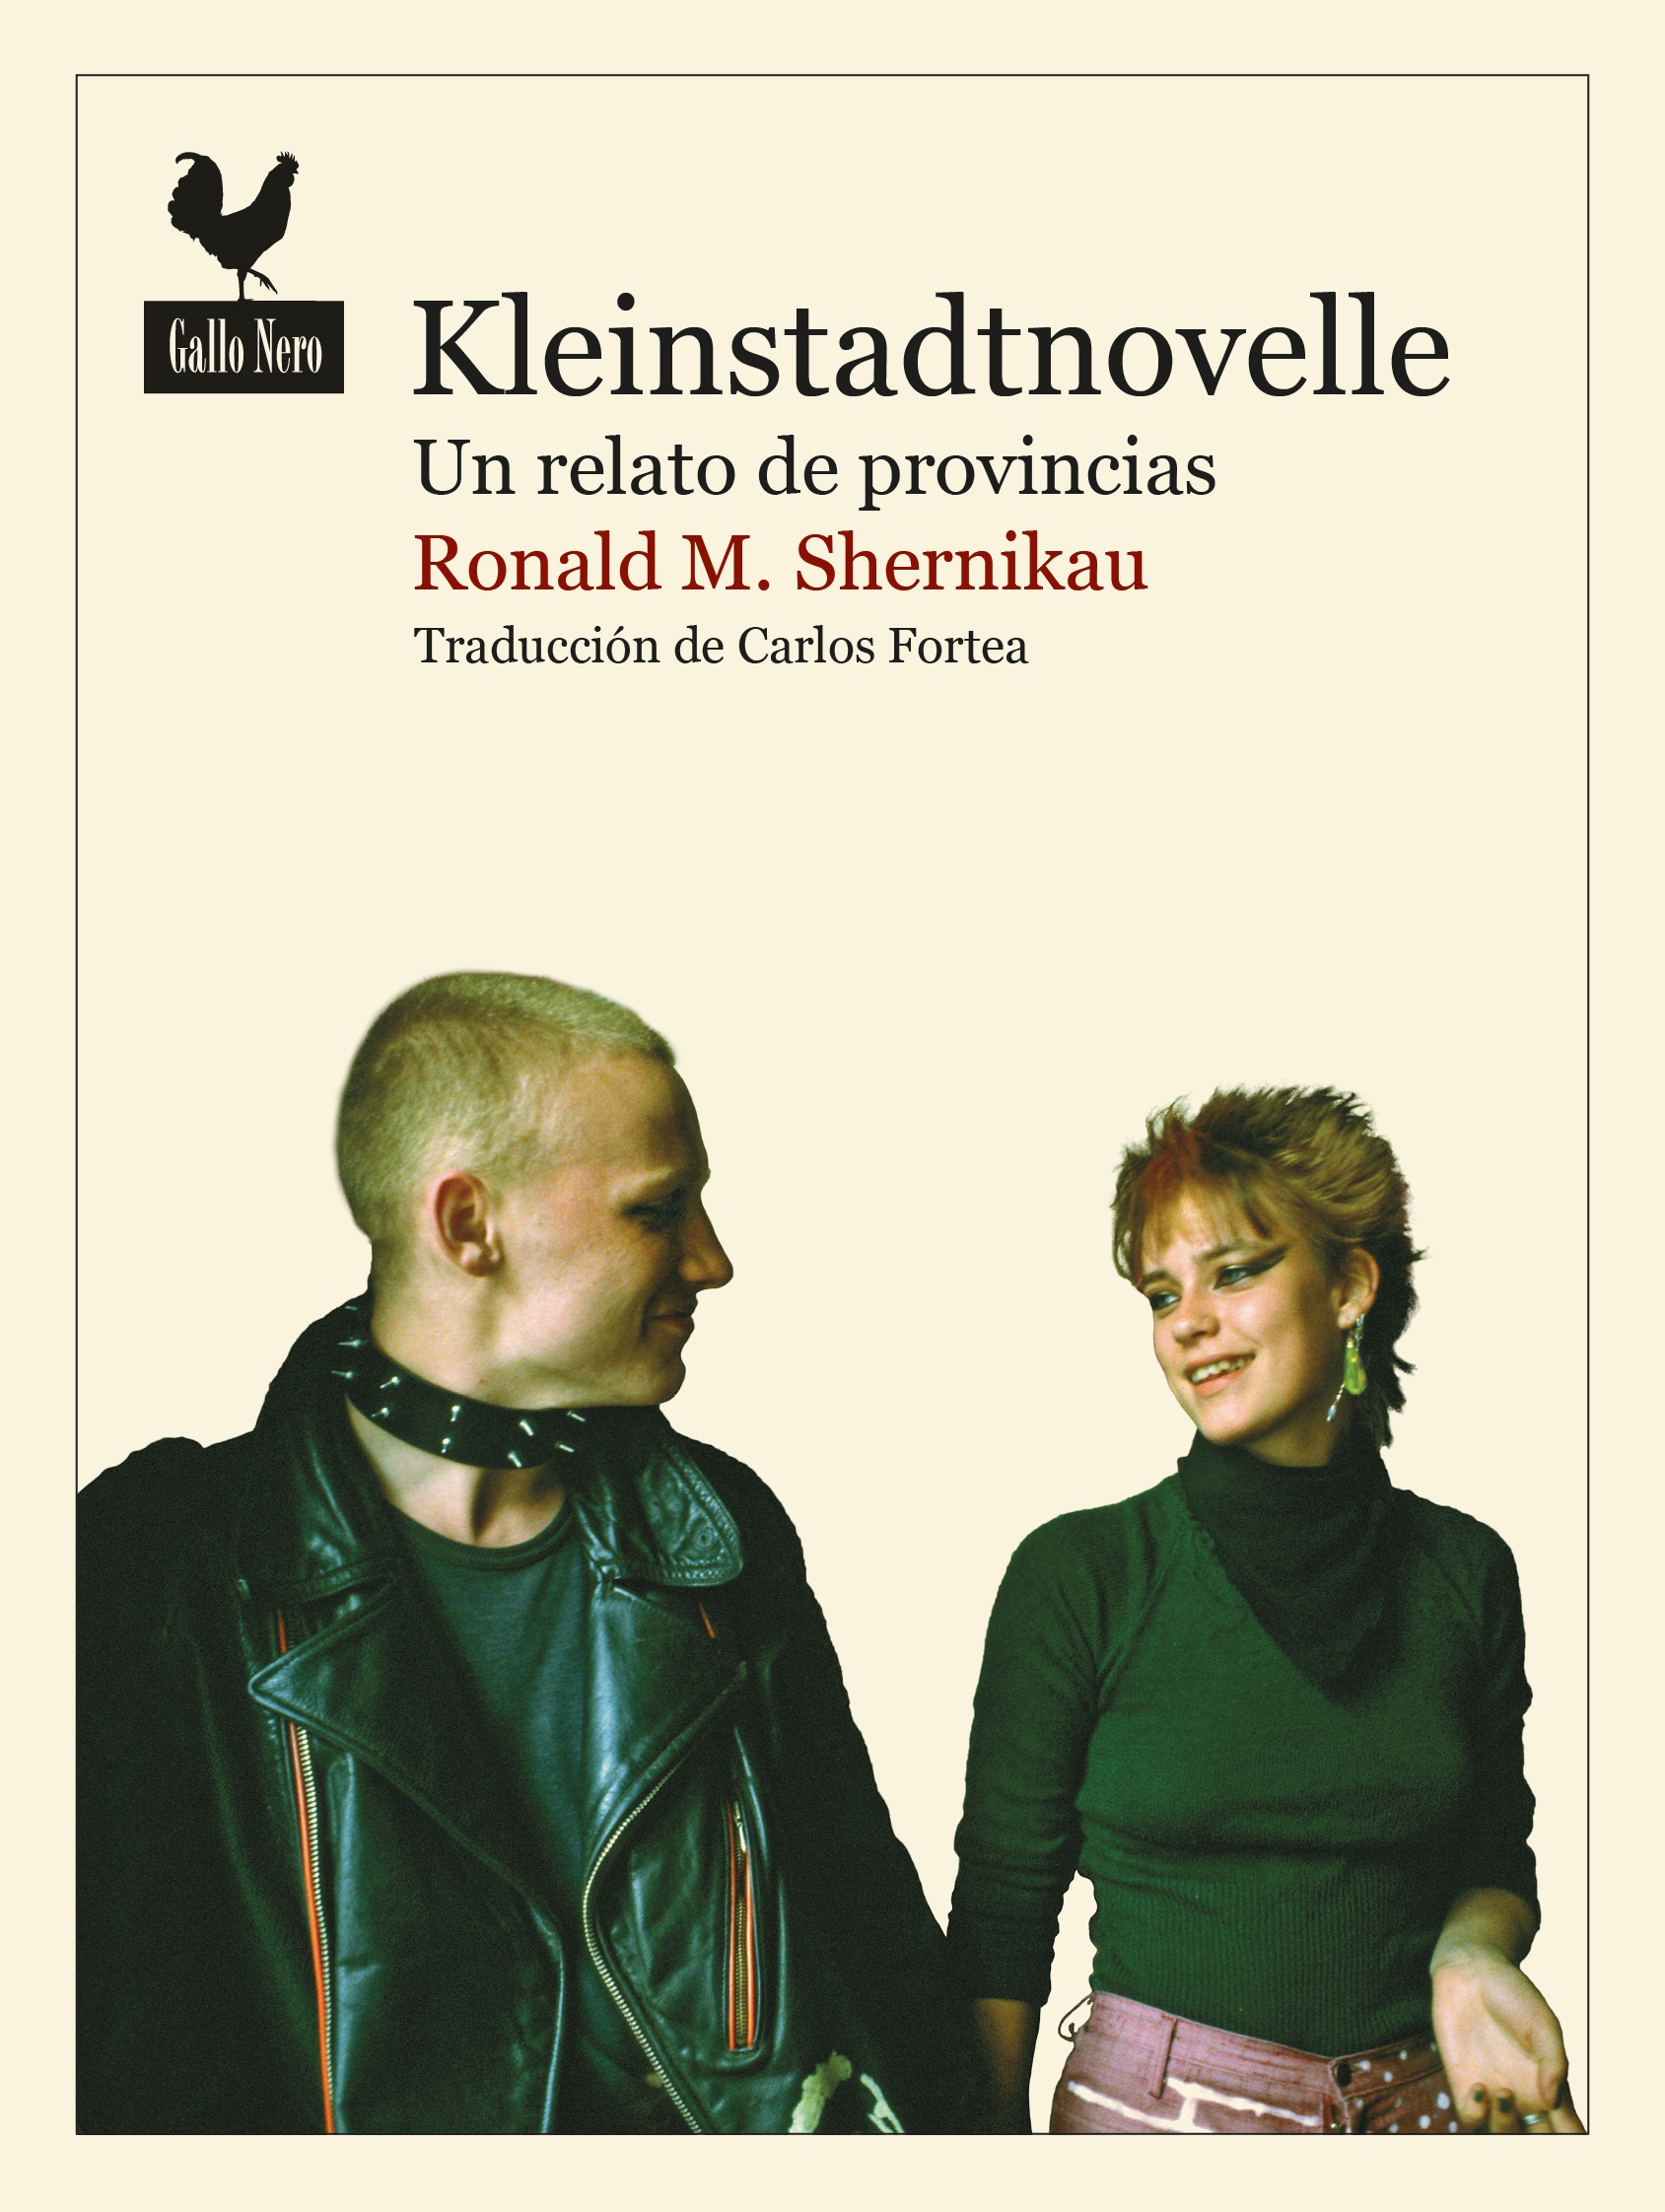 Portada de la novela «Kleinstadtnovelle», de Ronald M. Shernikau